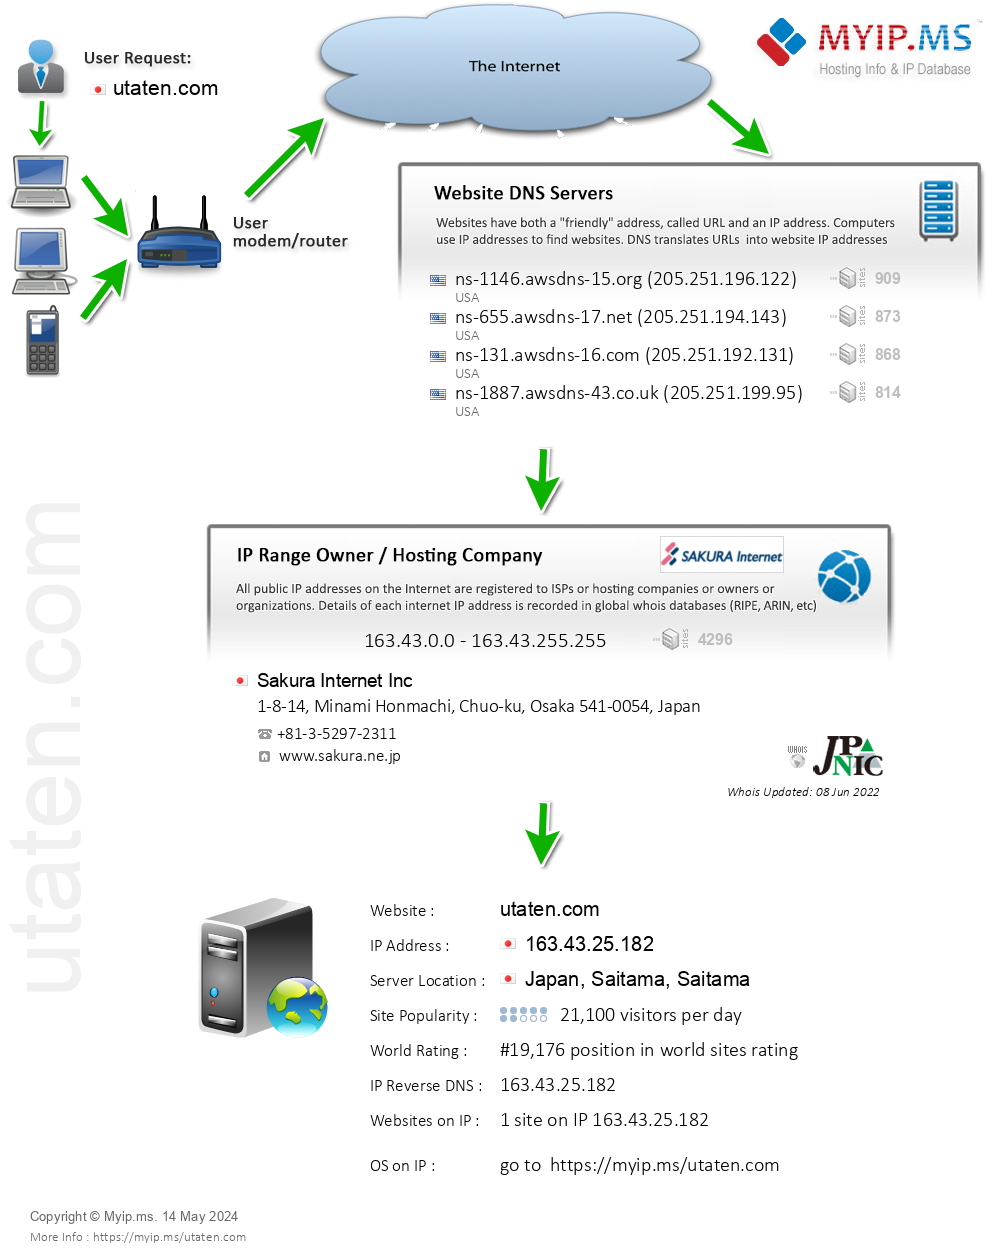 Utaten.com - Website Hosting Visual IP Diagram